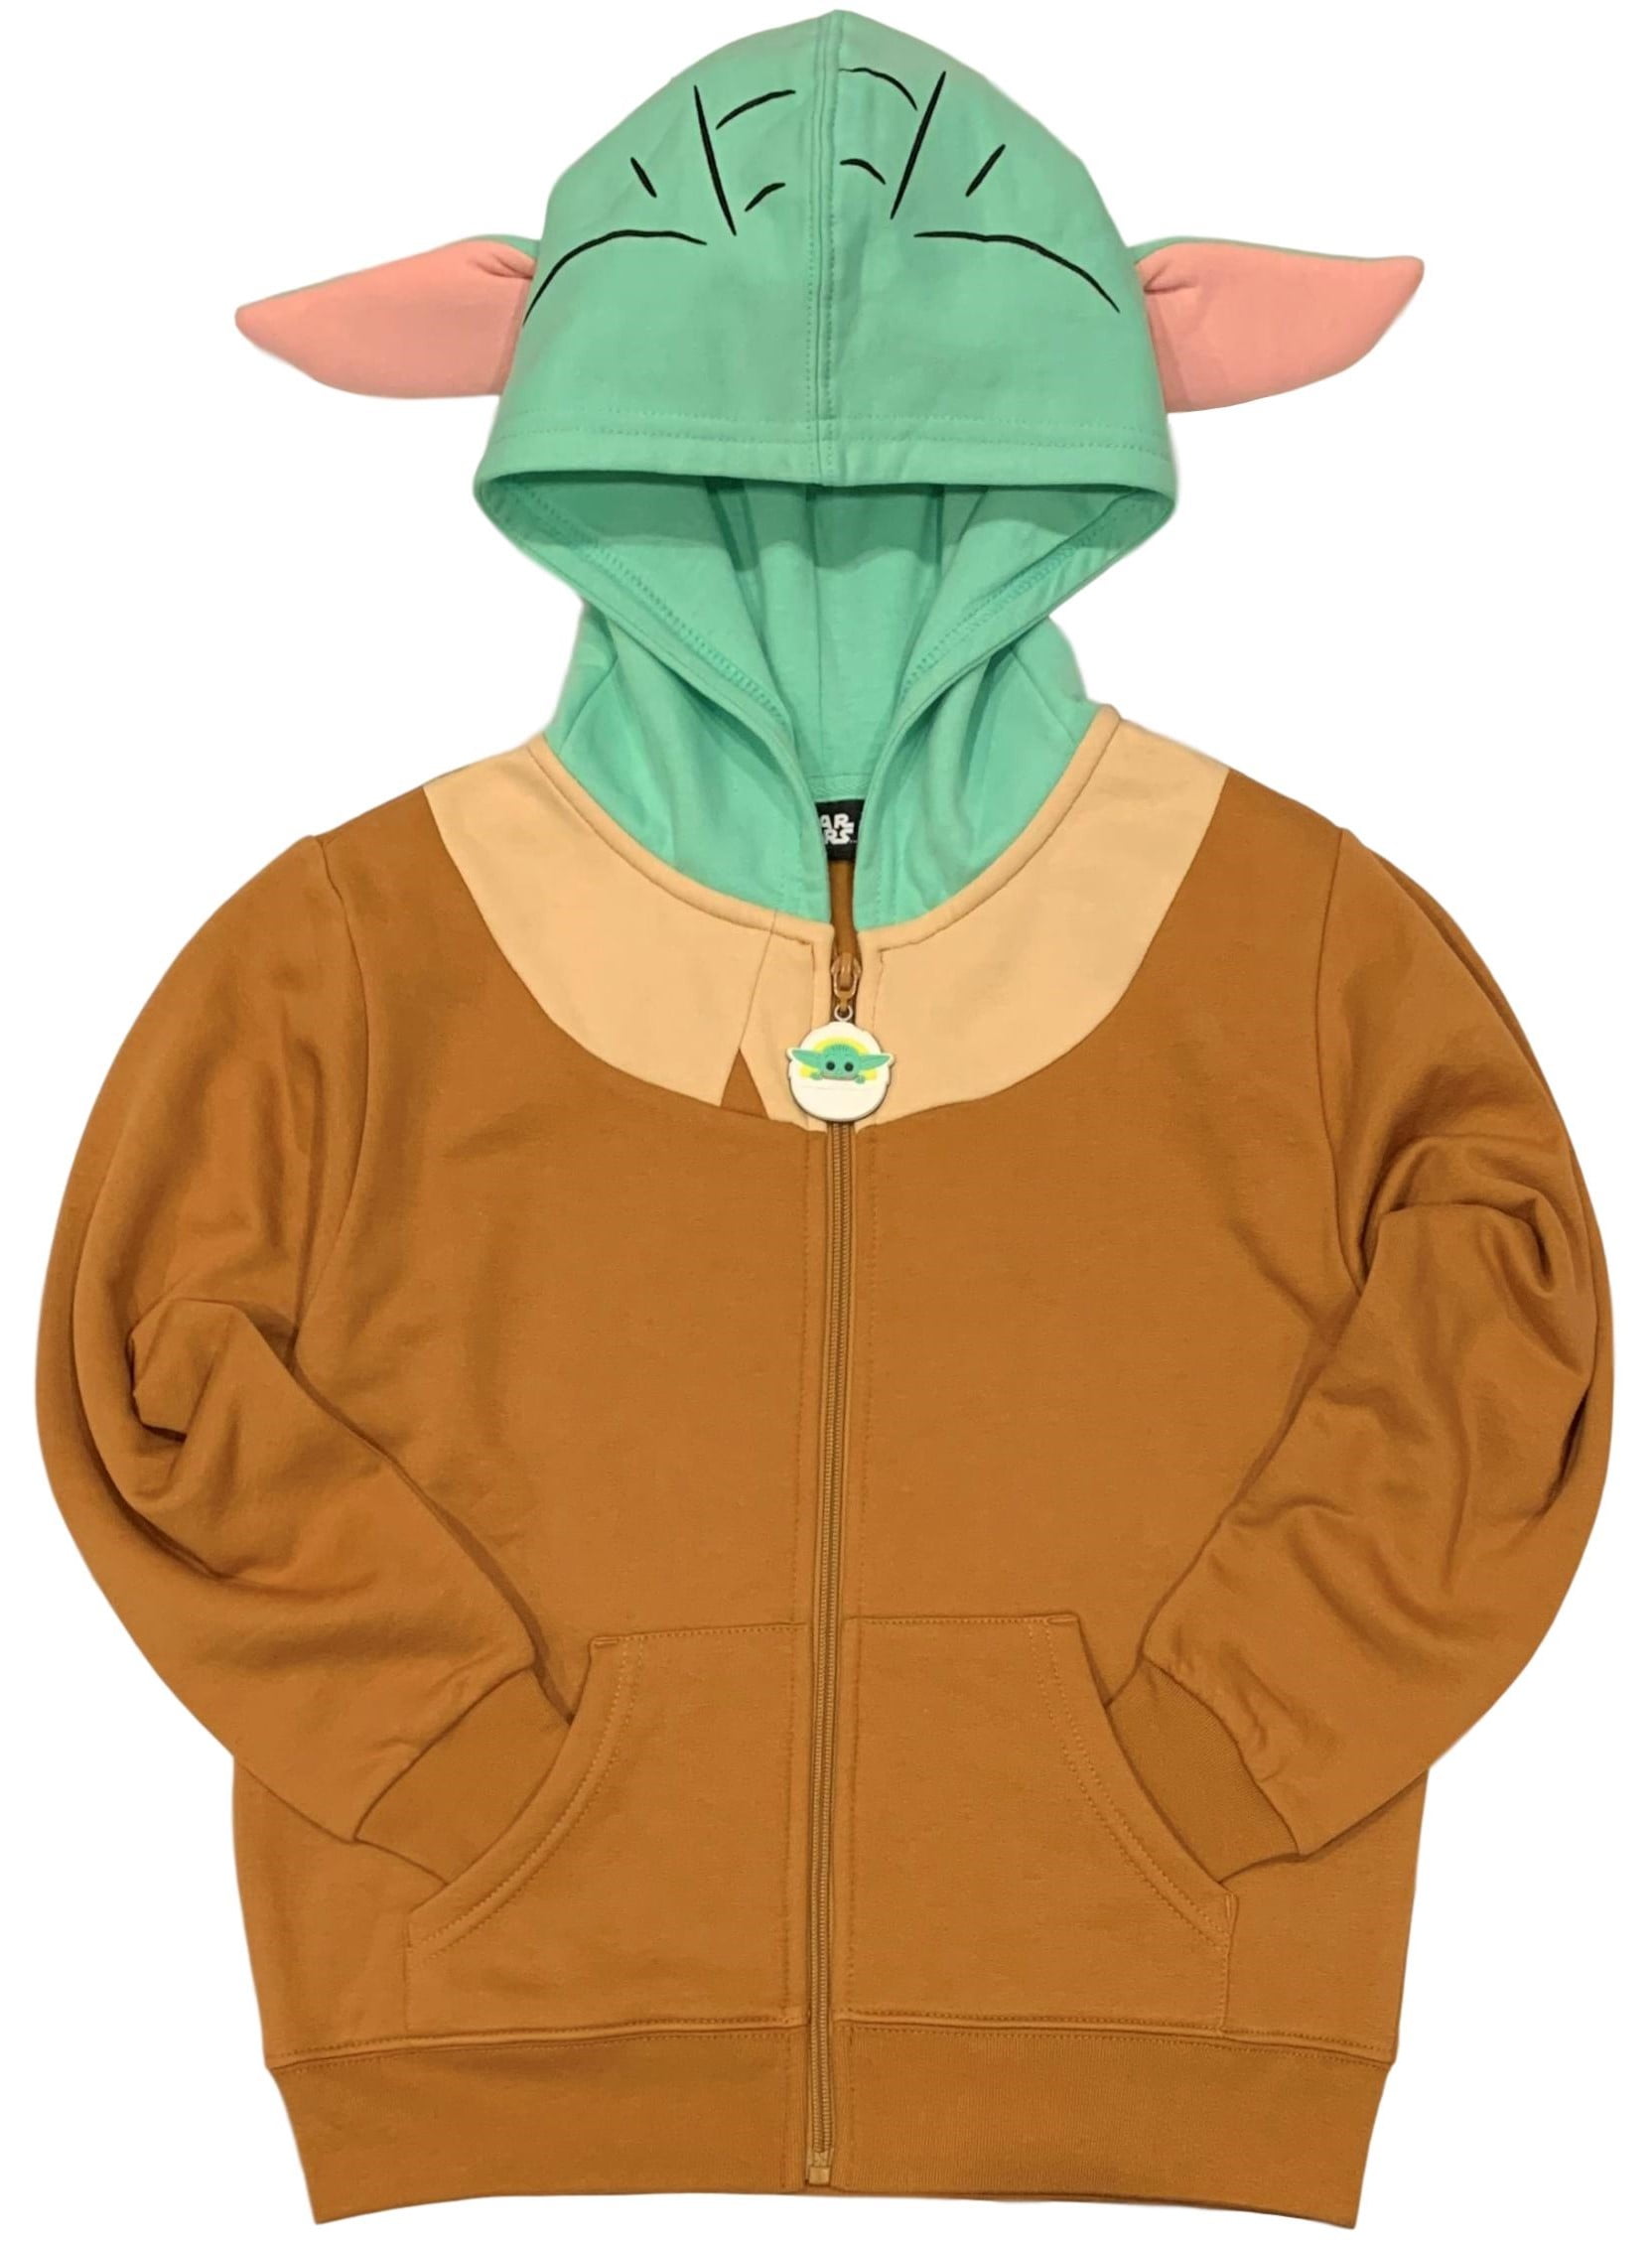 Baby Yoda The Mandalorian Kids Funny Hoody Sweatshirt Hoodie Pullover Tops Gift